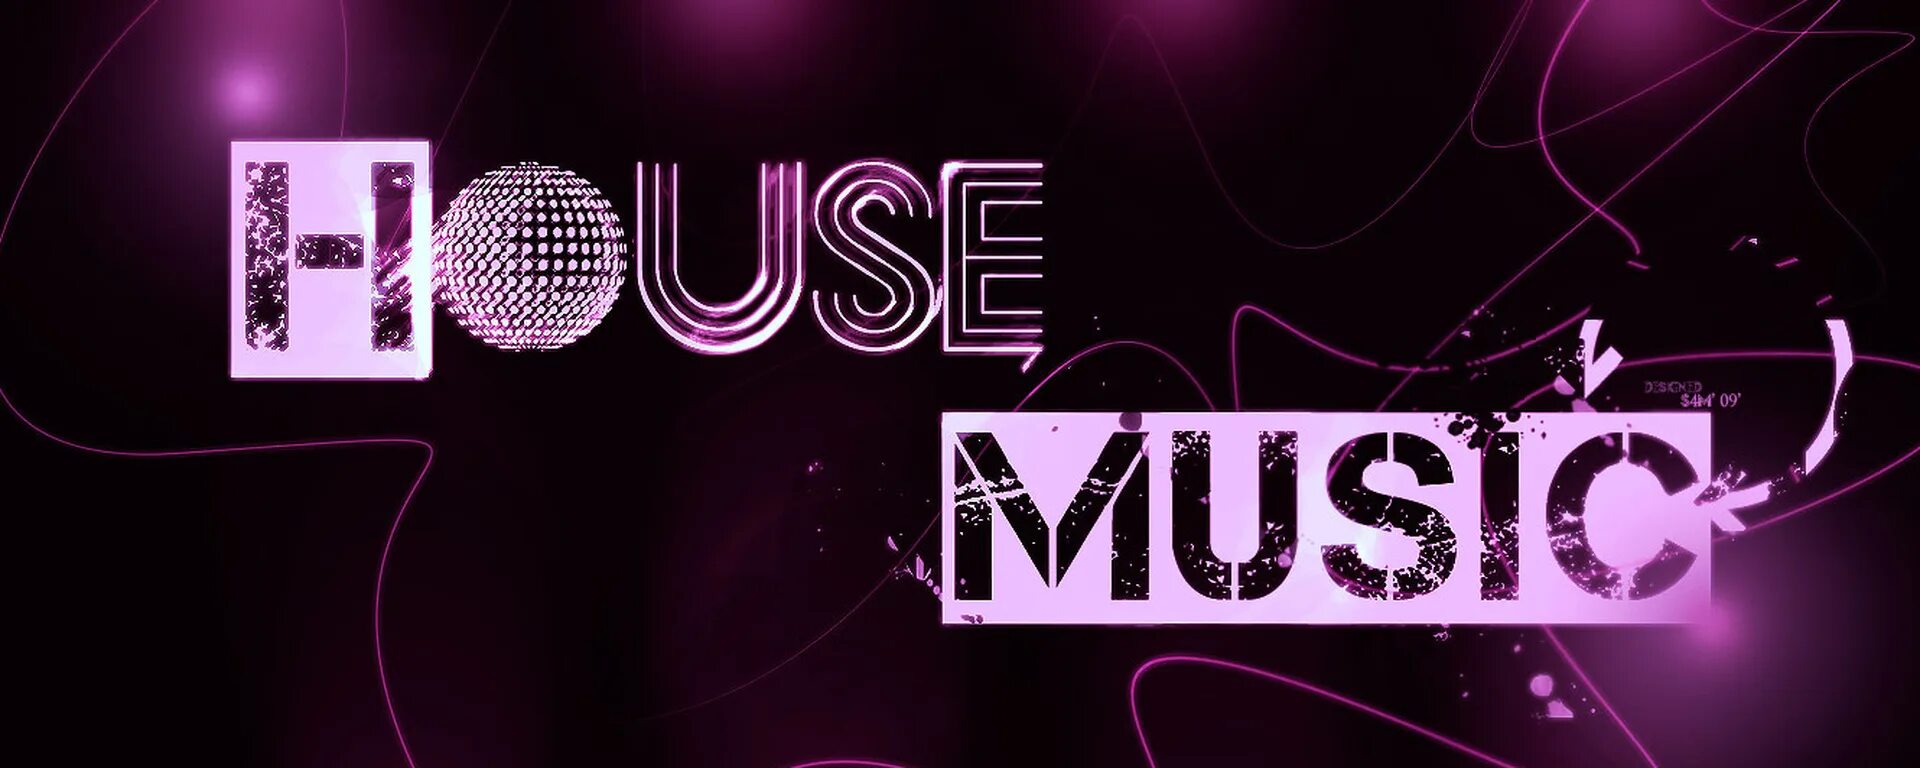 Хаус Мьюзик. House Music картинки. Хаус стиль музыки. House Music обложка.